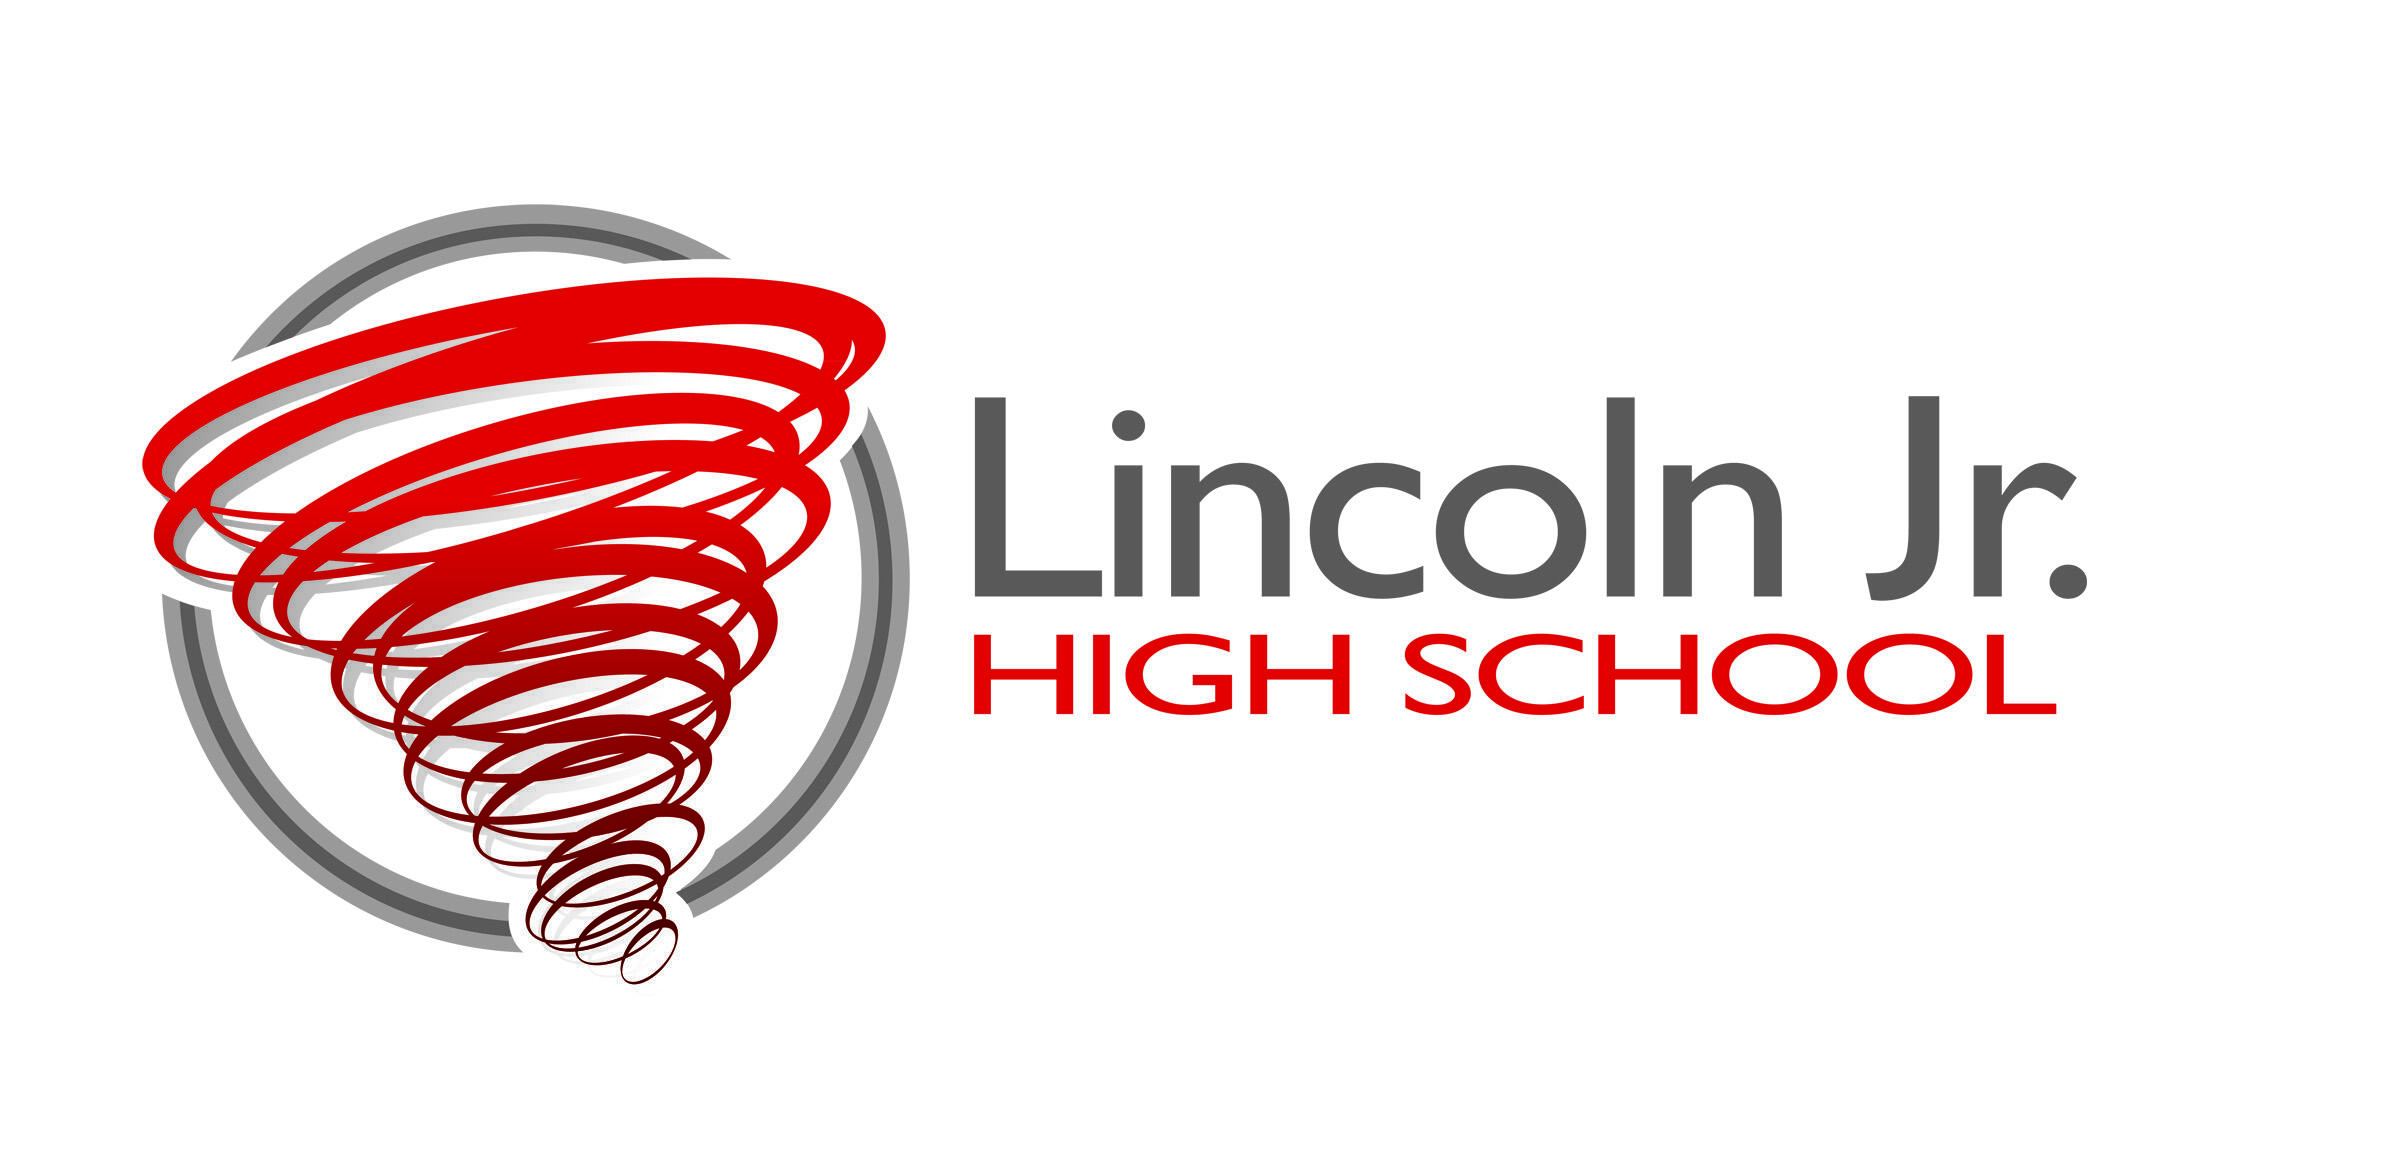 Lincoln Jr. High School Logo